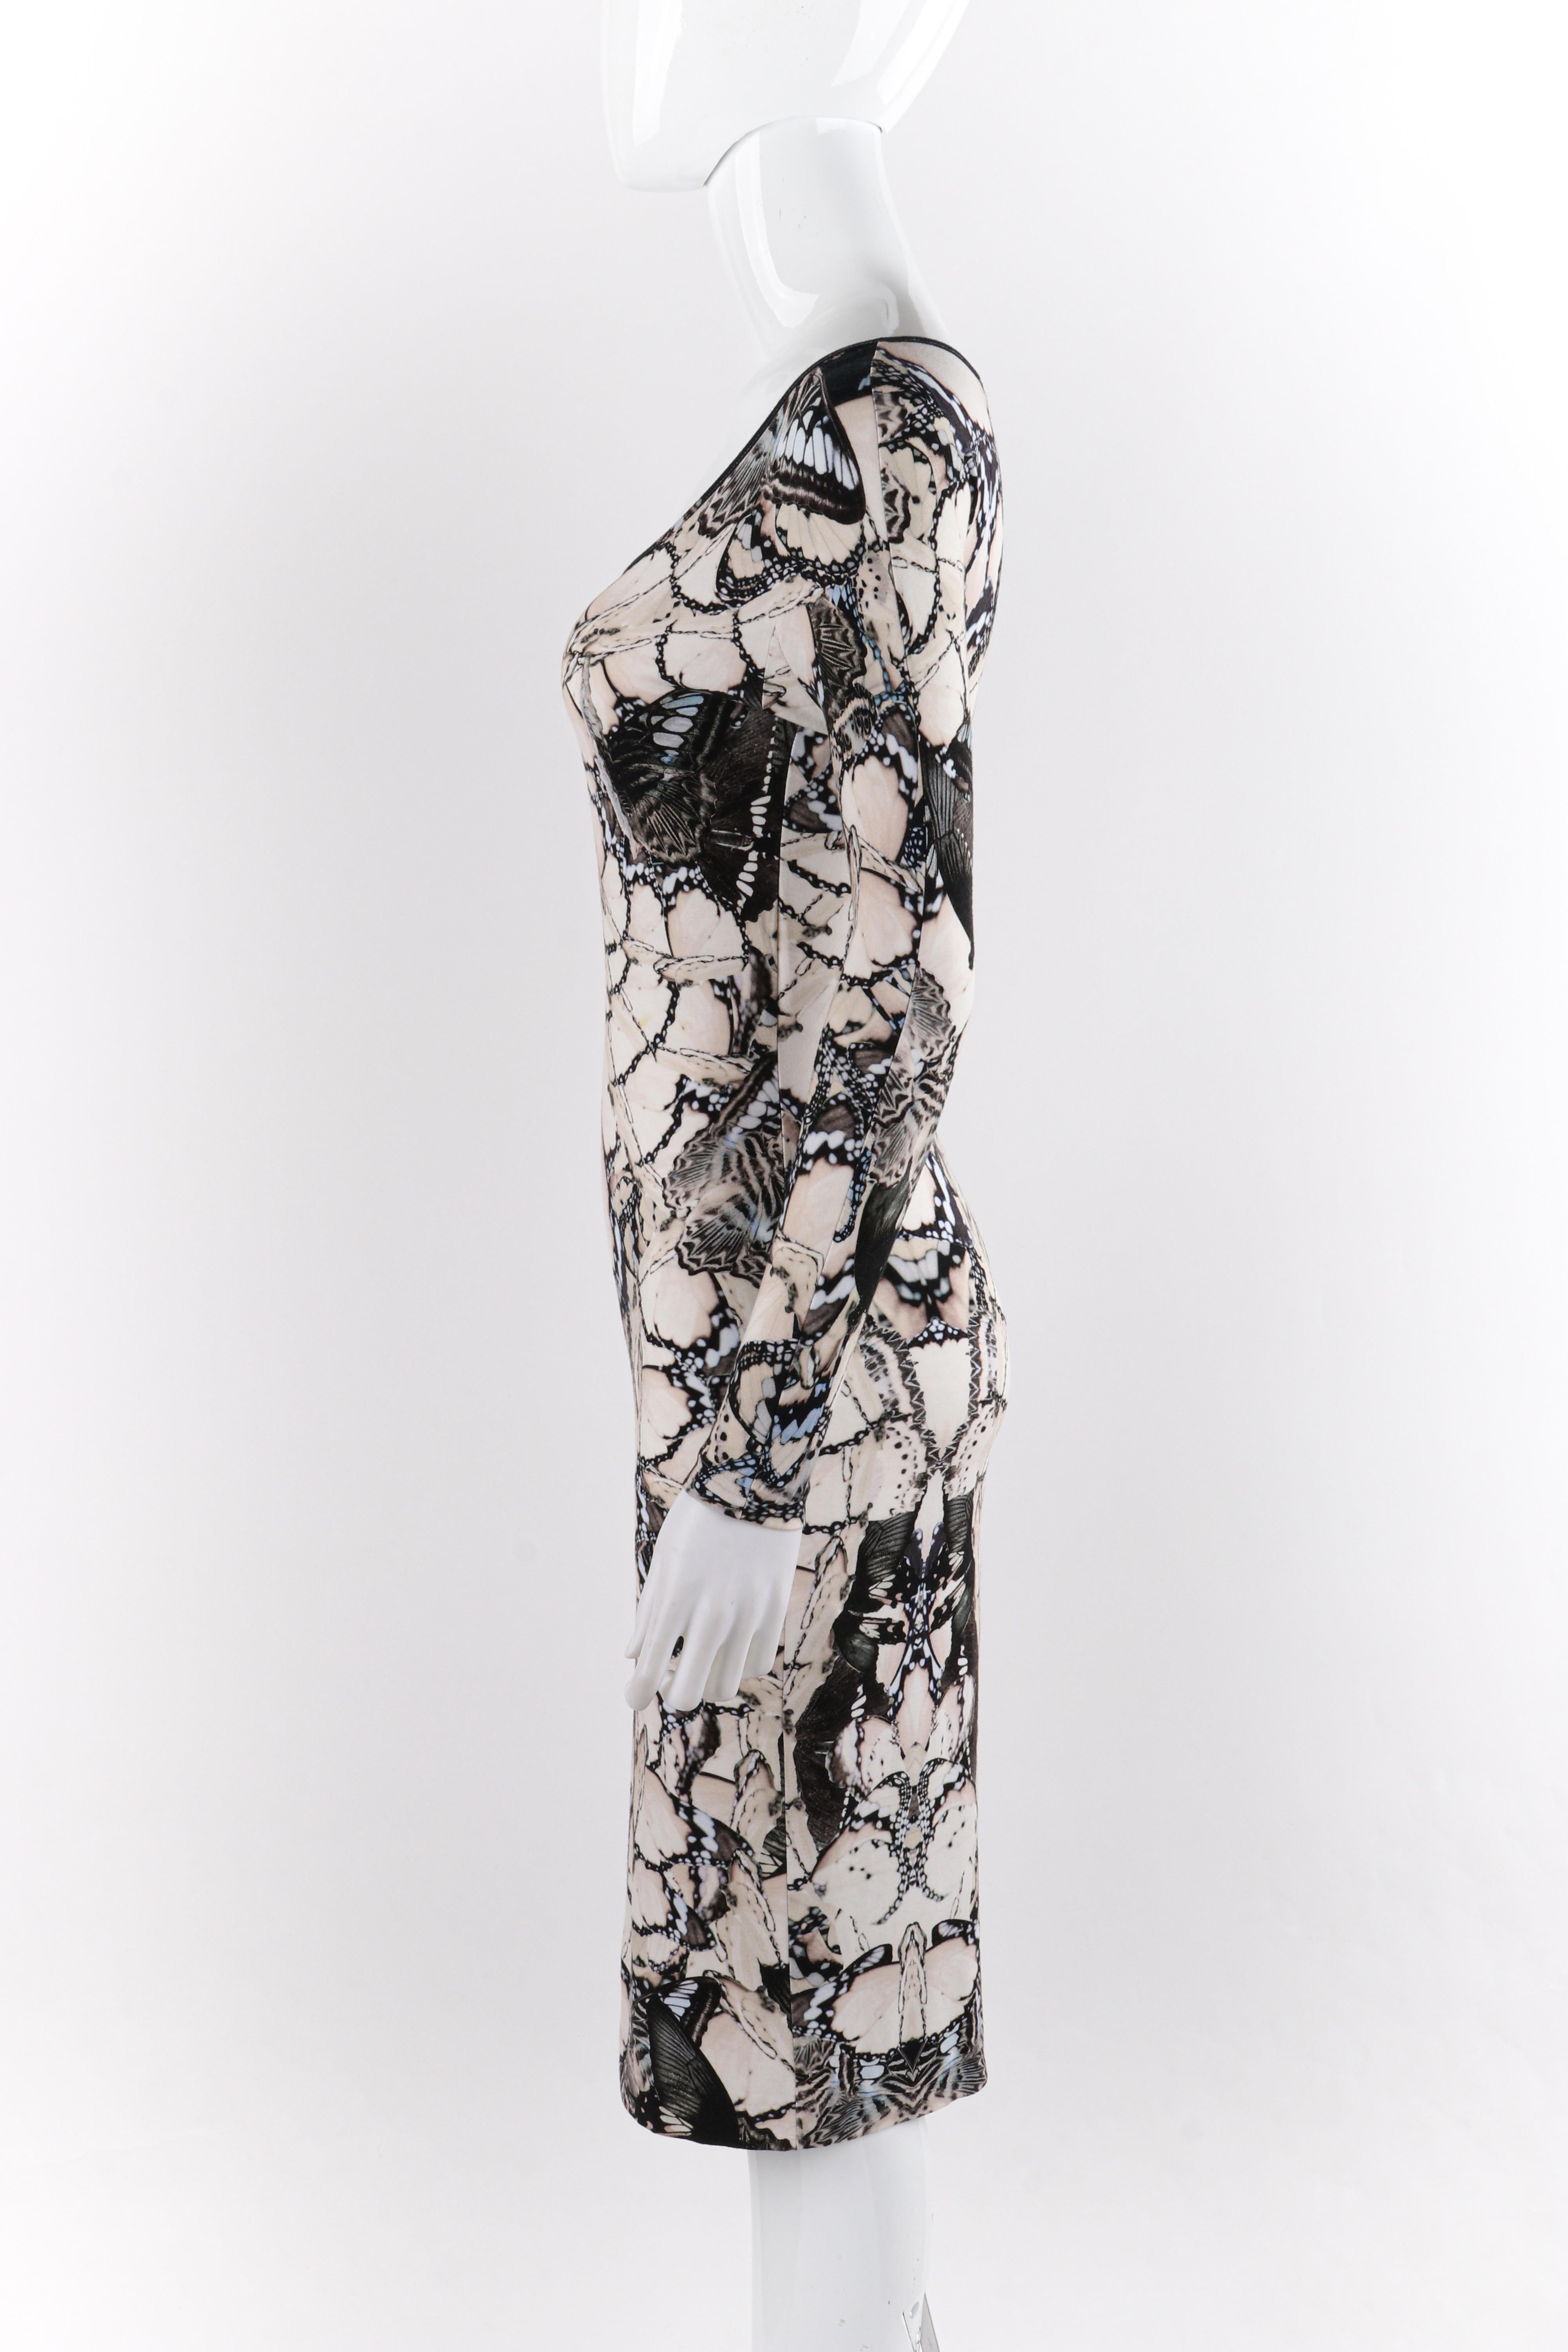 Gray ALEXANDER McQUEEN S/S 2011 Black White Cream Butterfly Print Knit Sheath Dress For Sale